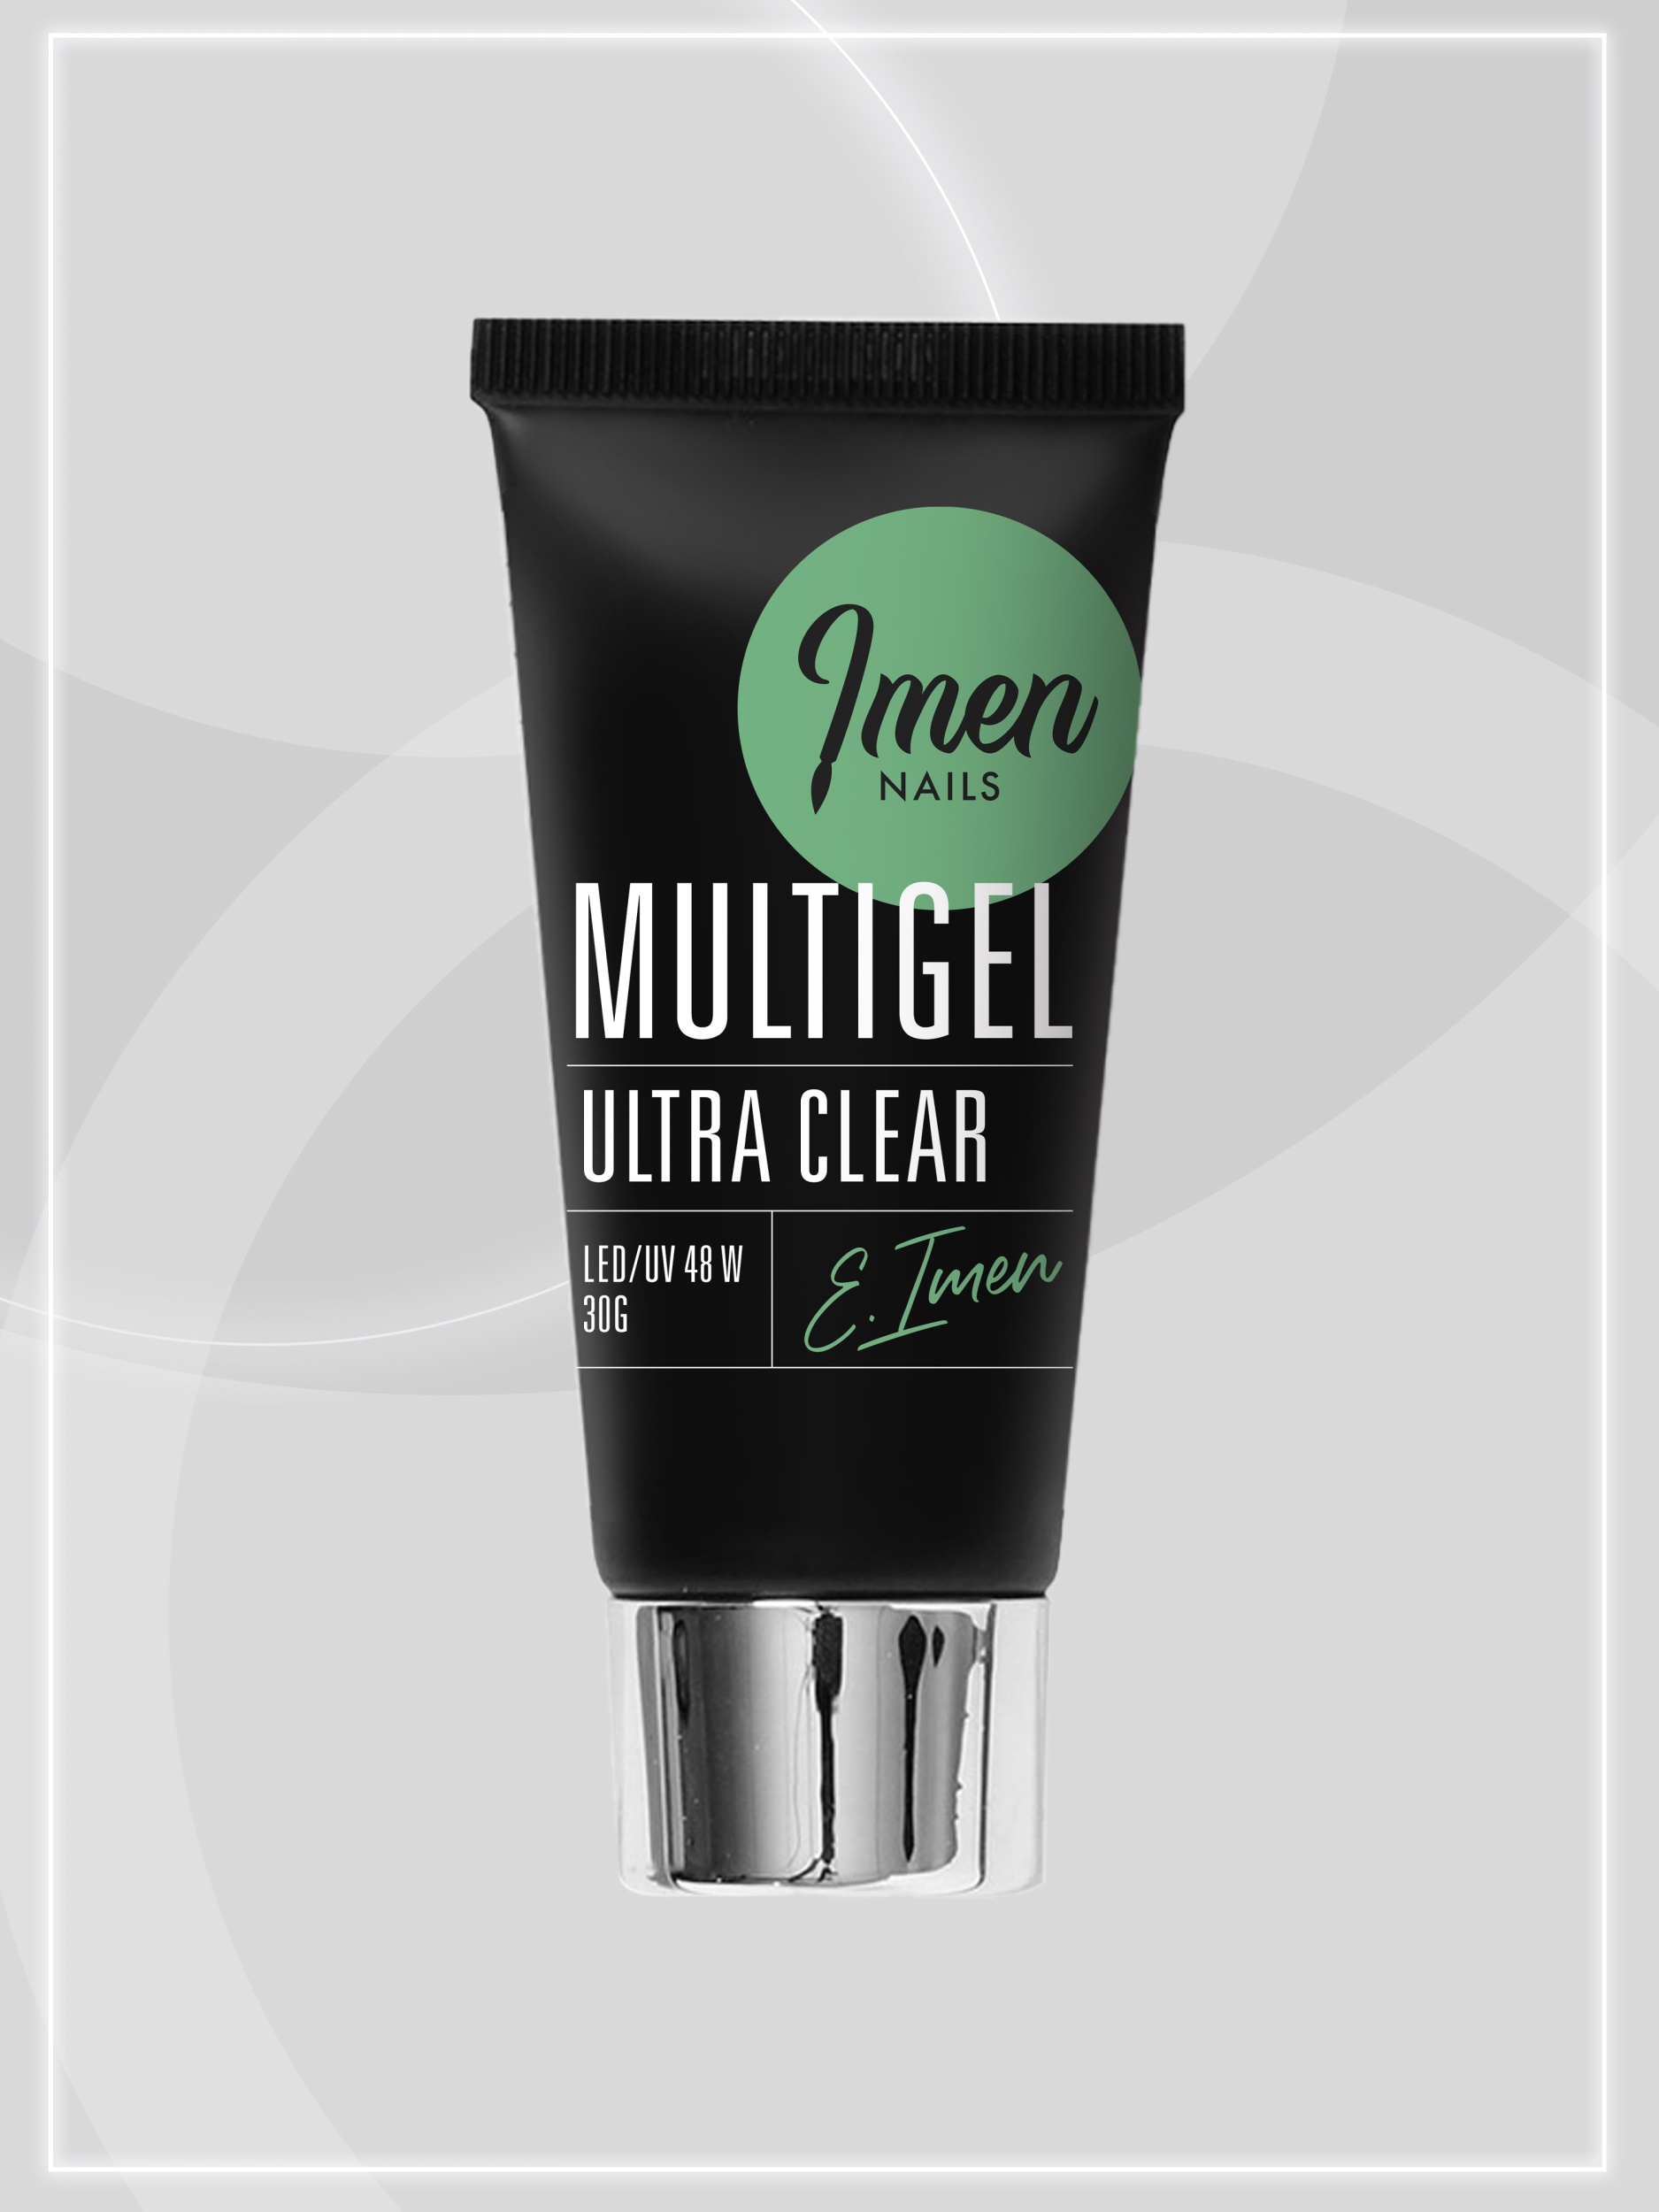 Multigel Clear Ultra Мультигель (ультра-прозрачный) Imen, 30 мл